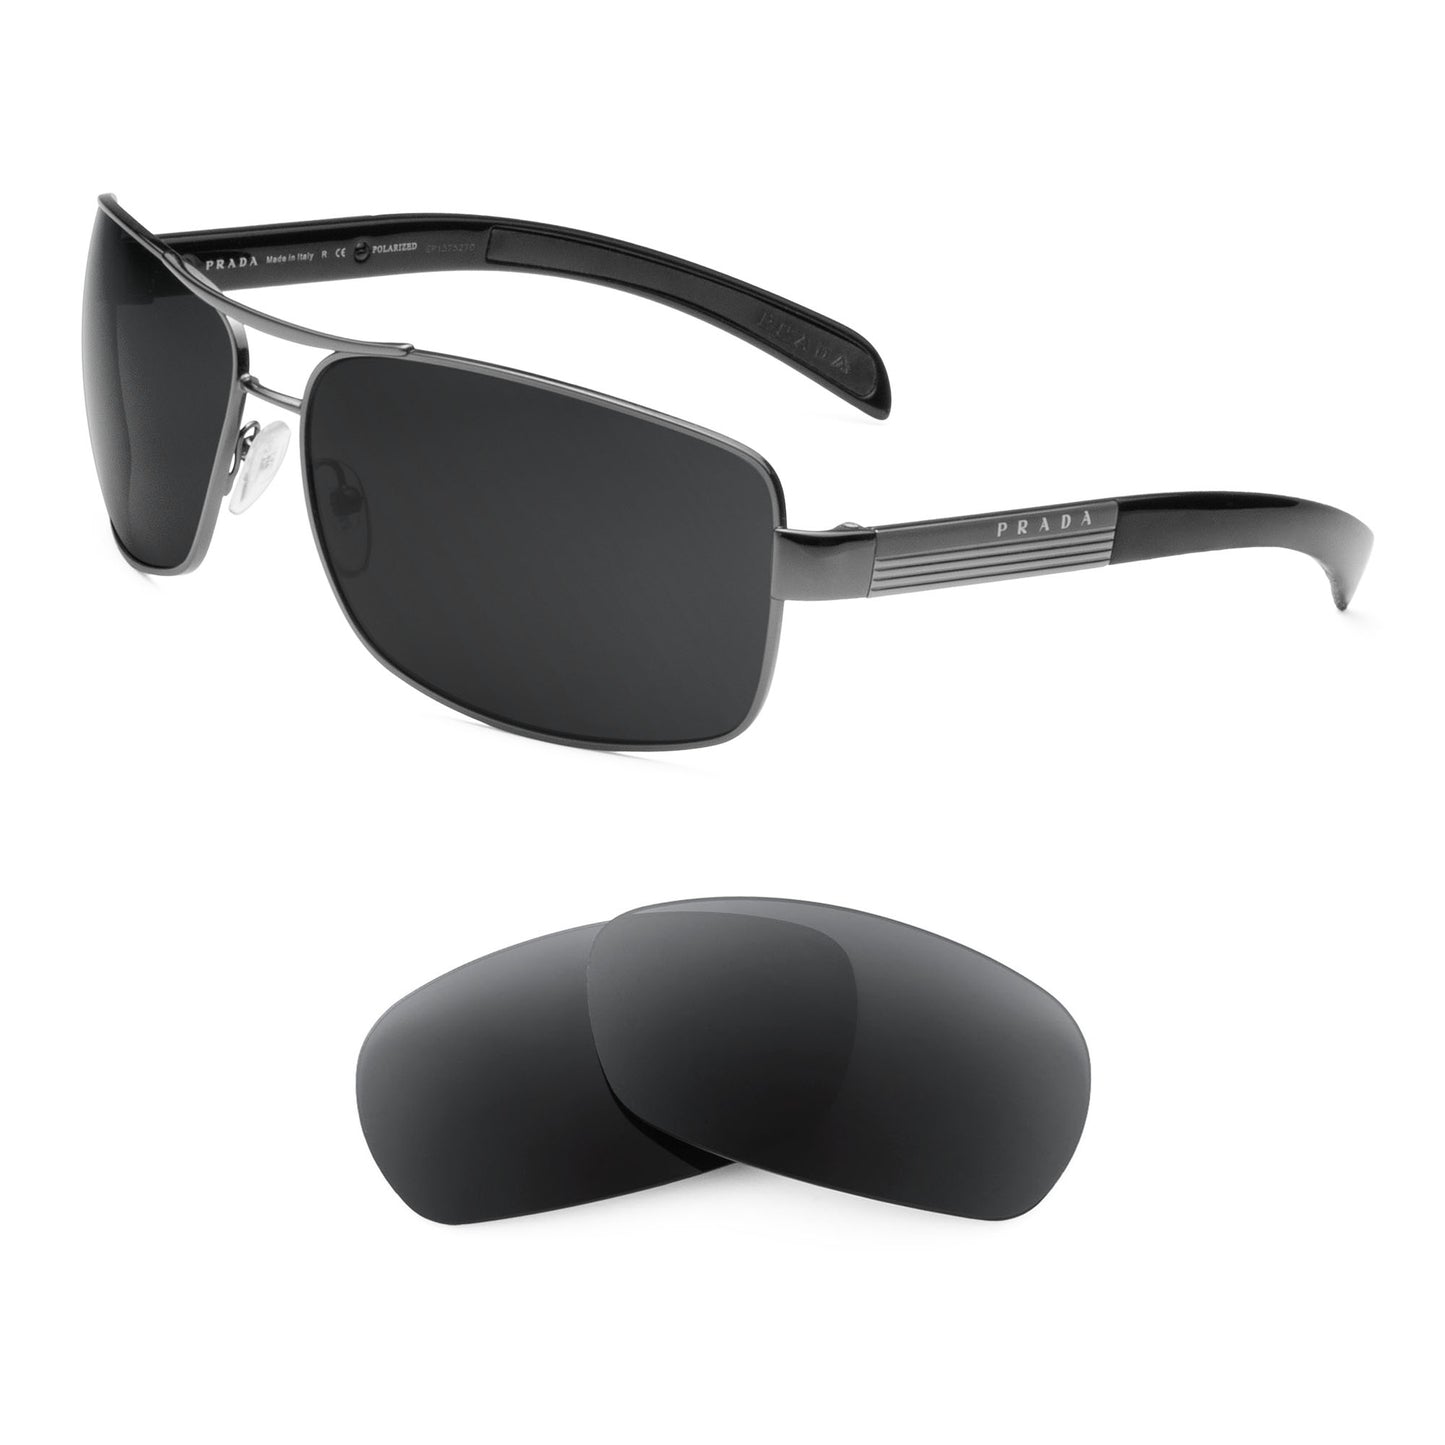 Prada SPS 54I sunglasses with replacement lenses